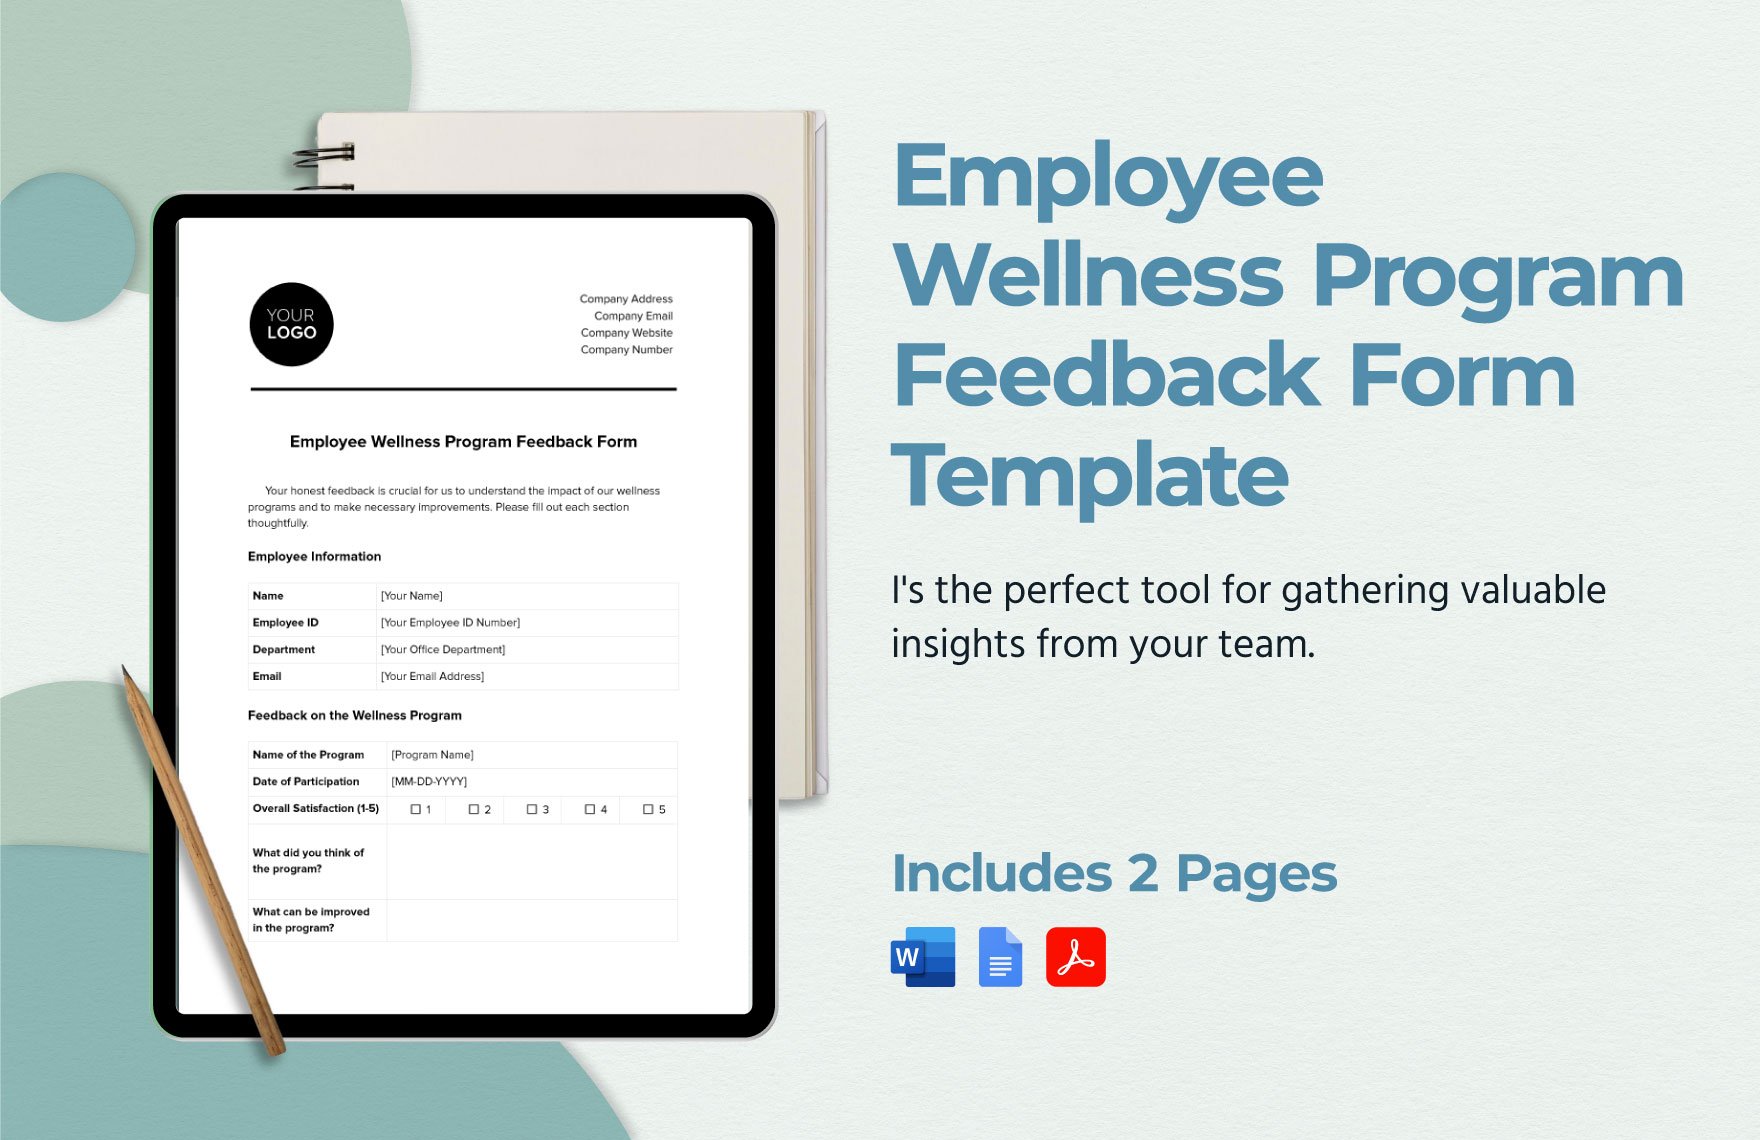 Employee Wellness Program Feedback Form Template